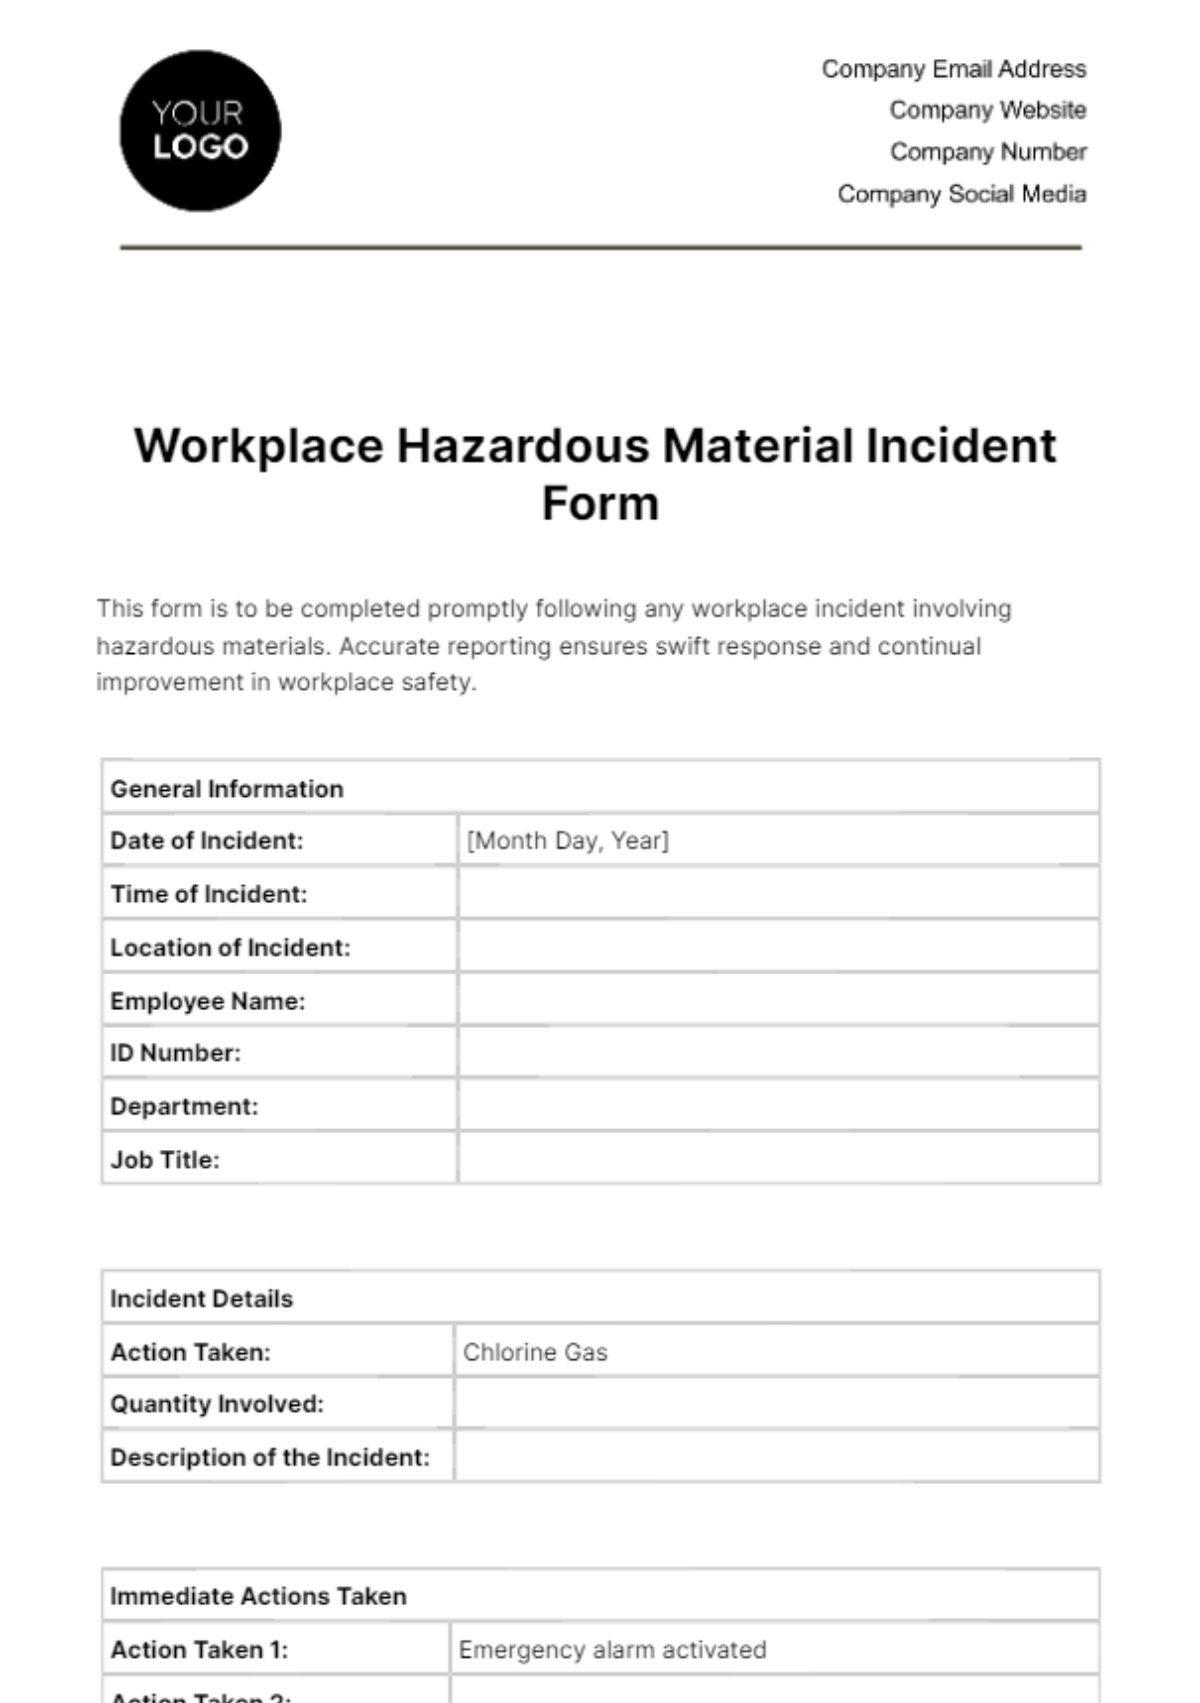 Workplace Hazardous Material Incident Form Template